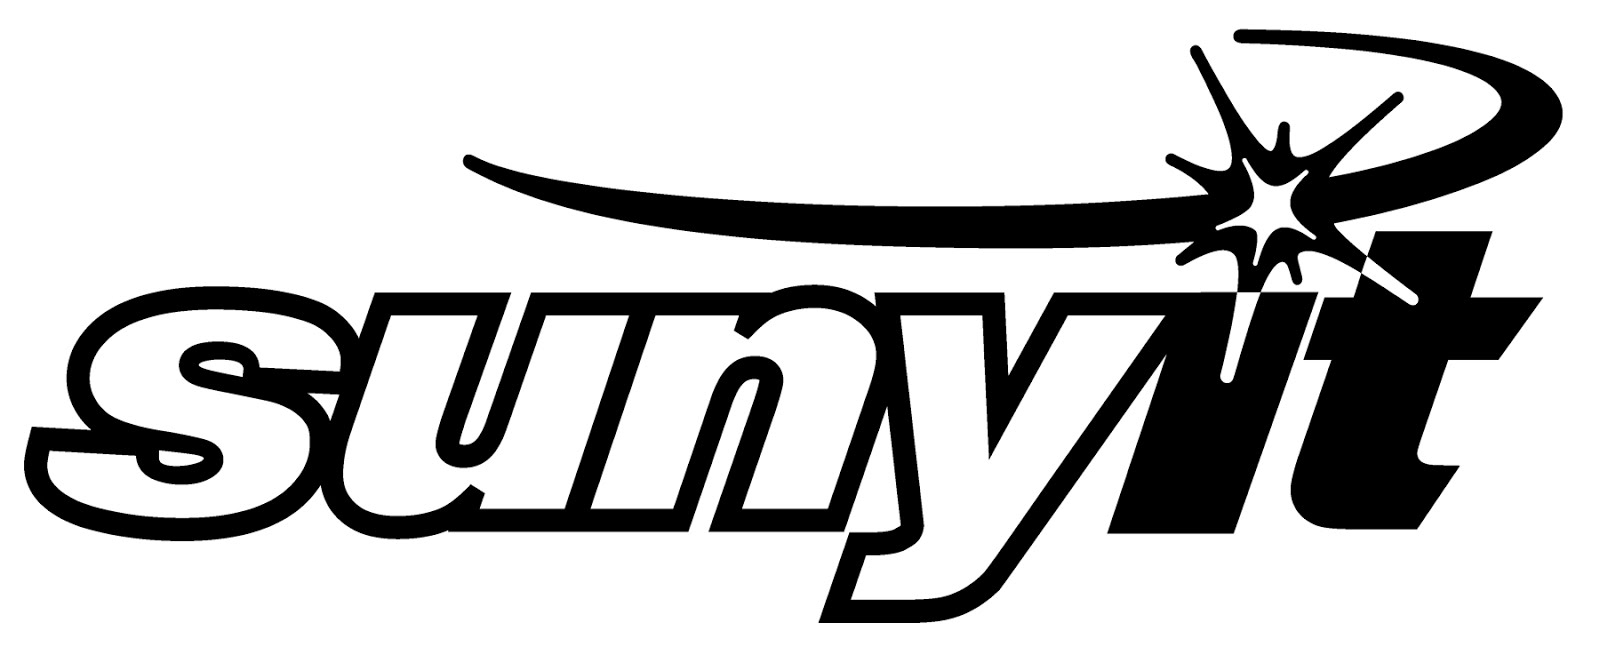 SUNYIT Black logo.jpg